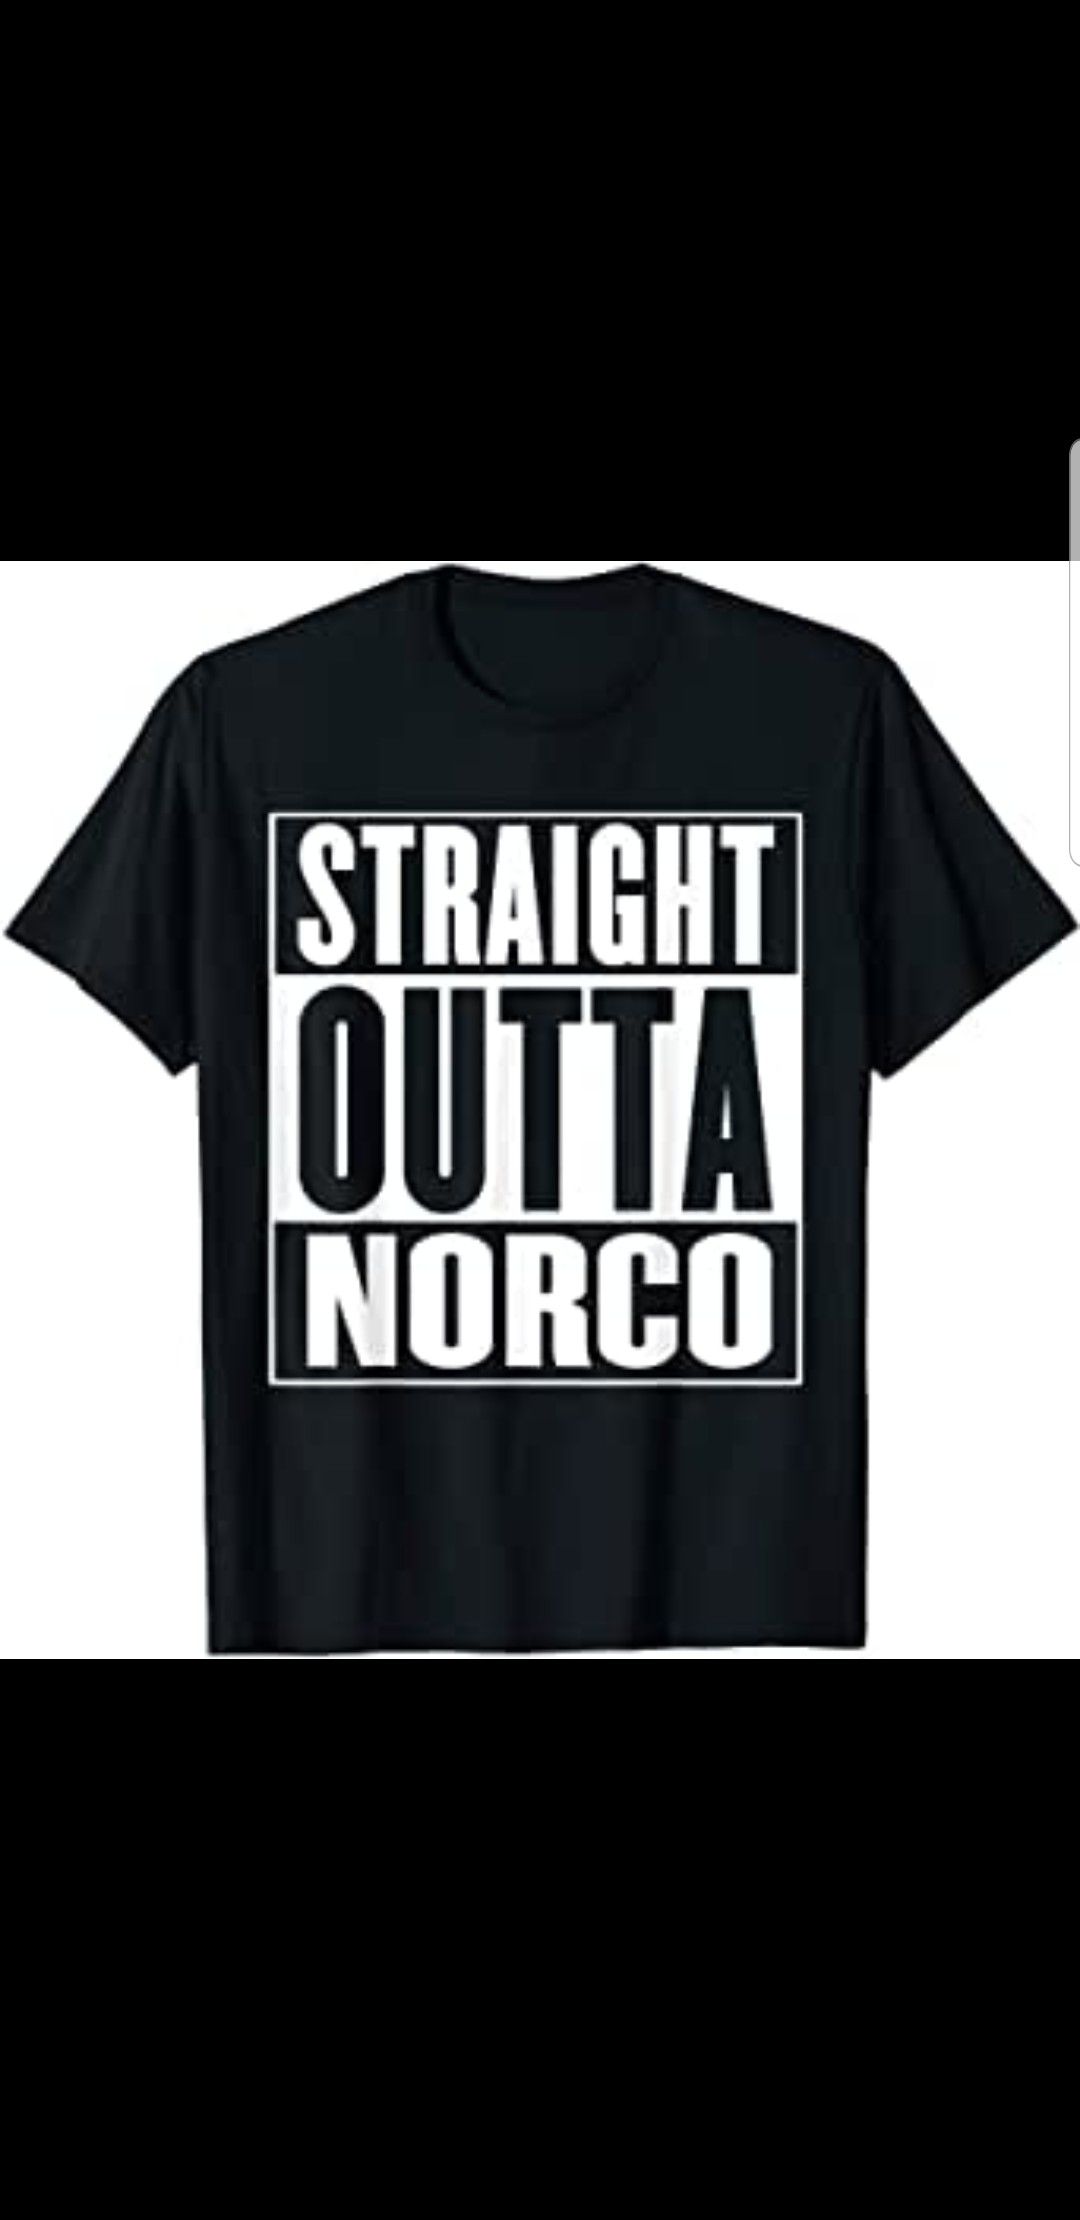 Norco tshirt size 10